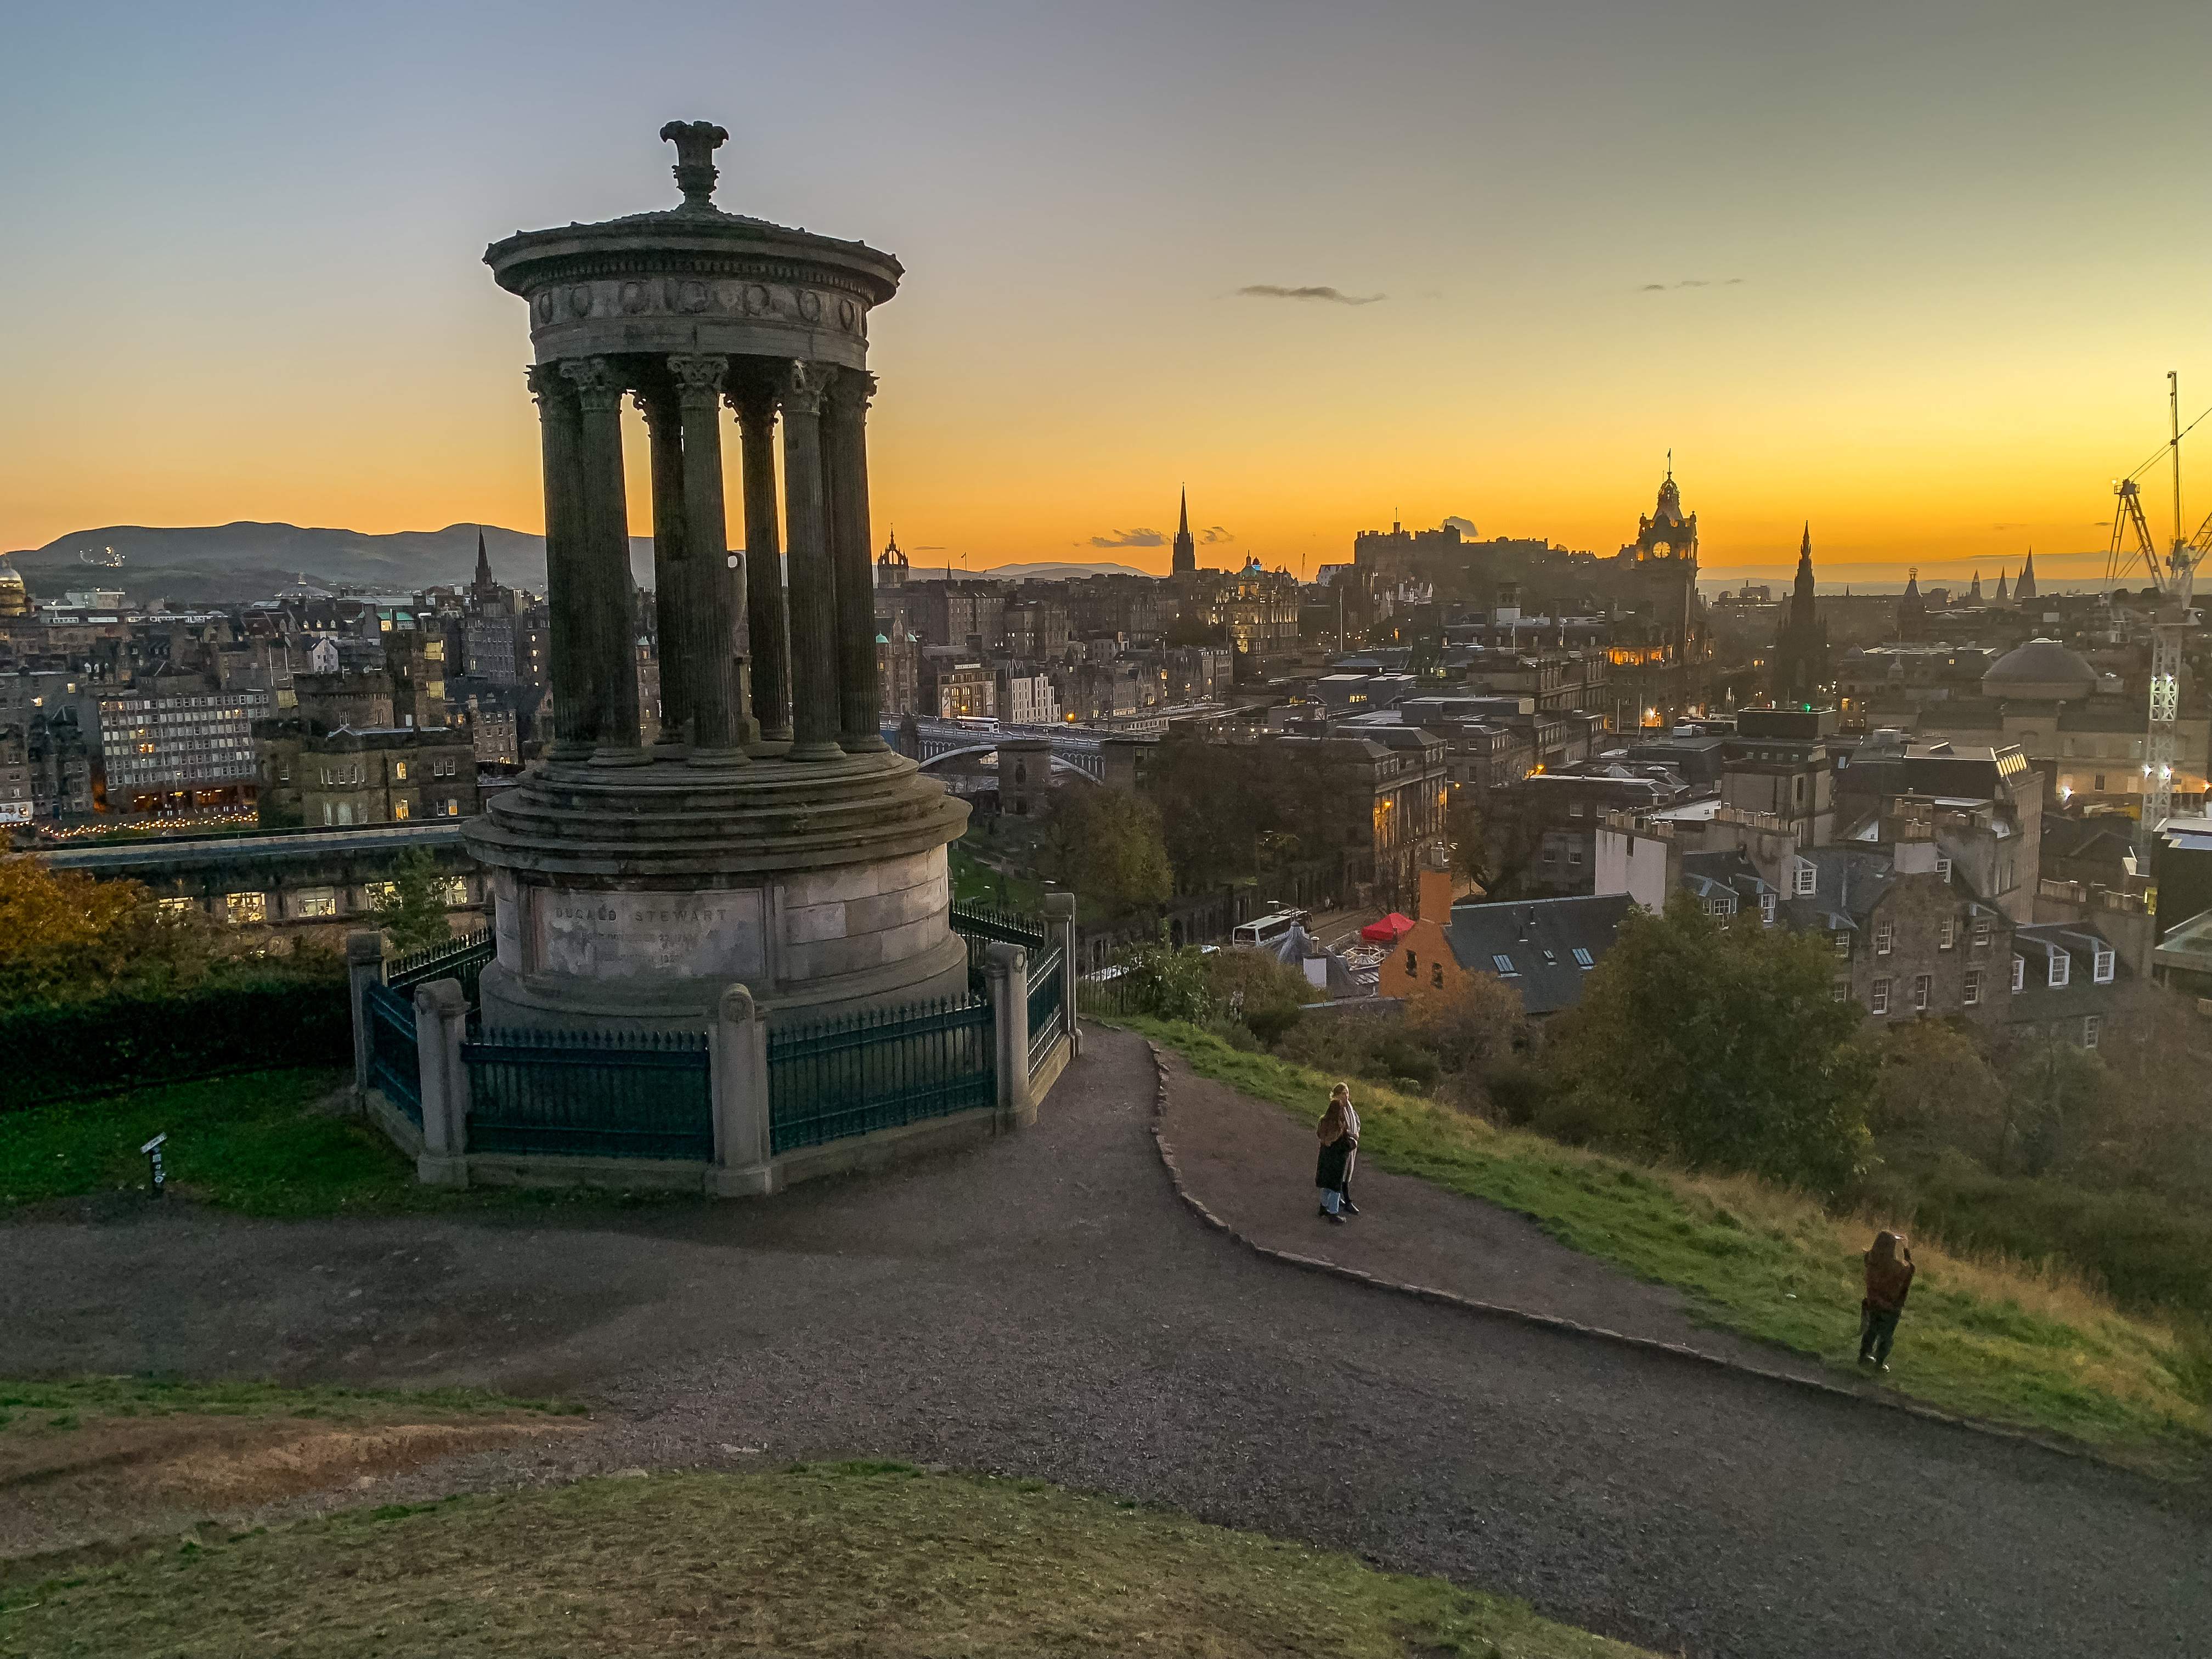 Dugald Stewart Monument on Calton Hill overlooking Edinburgh, Scotland, UK